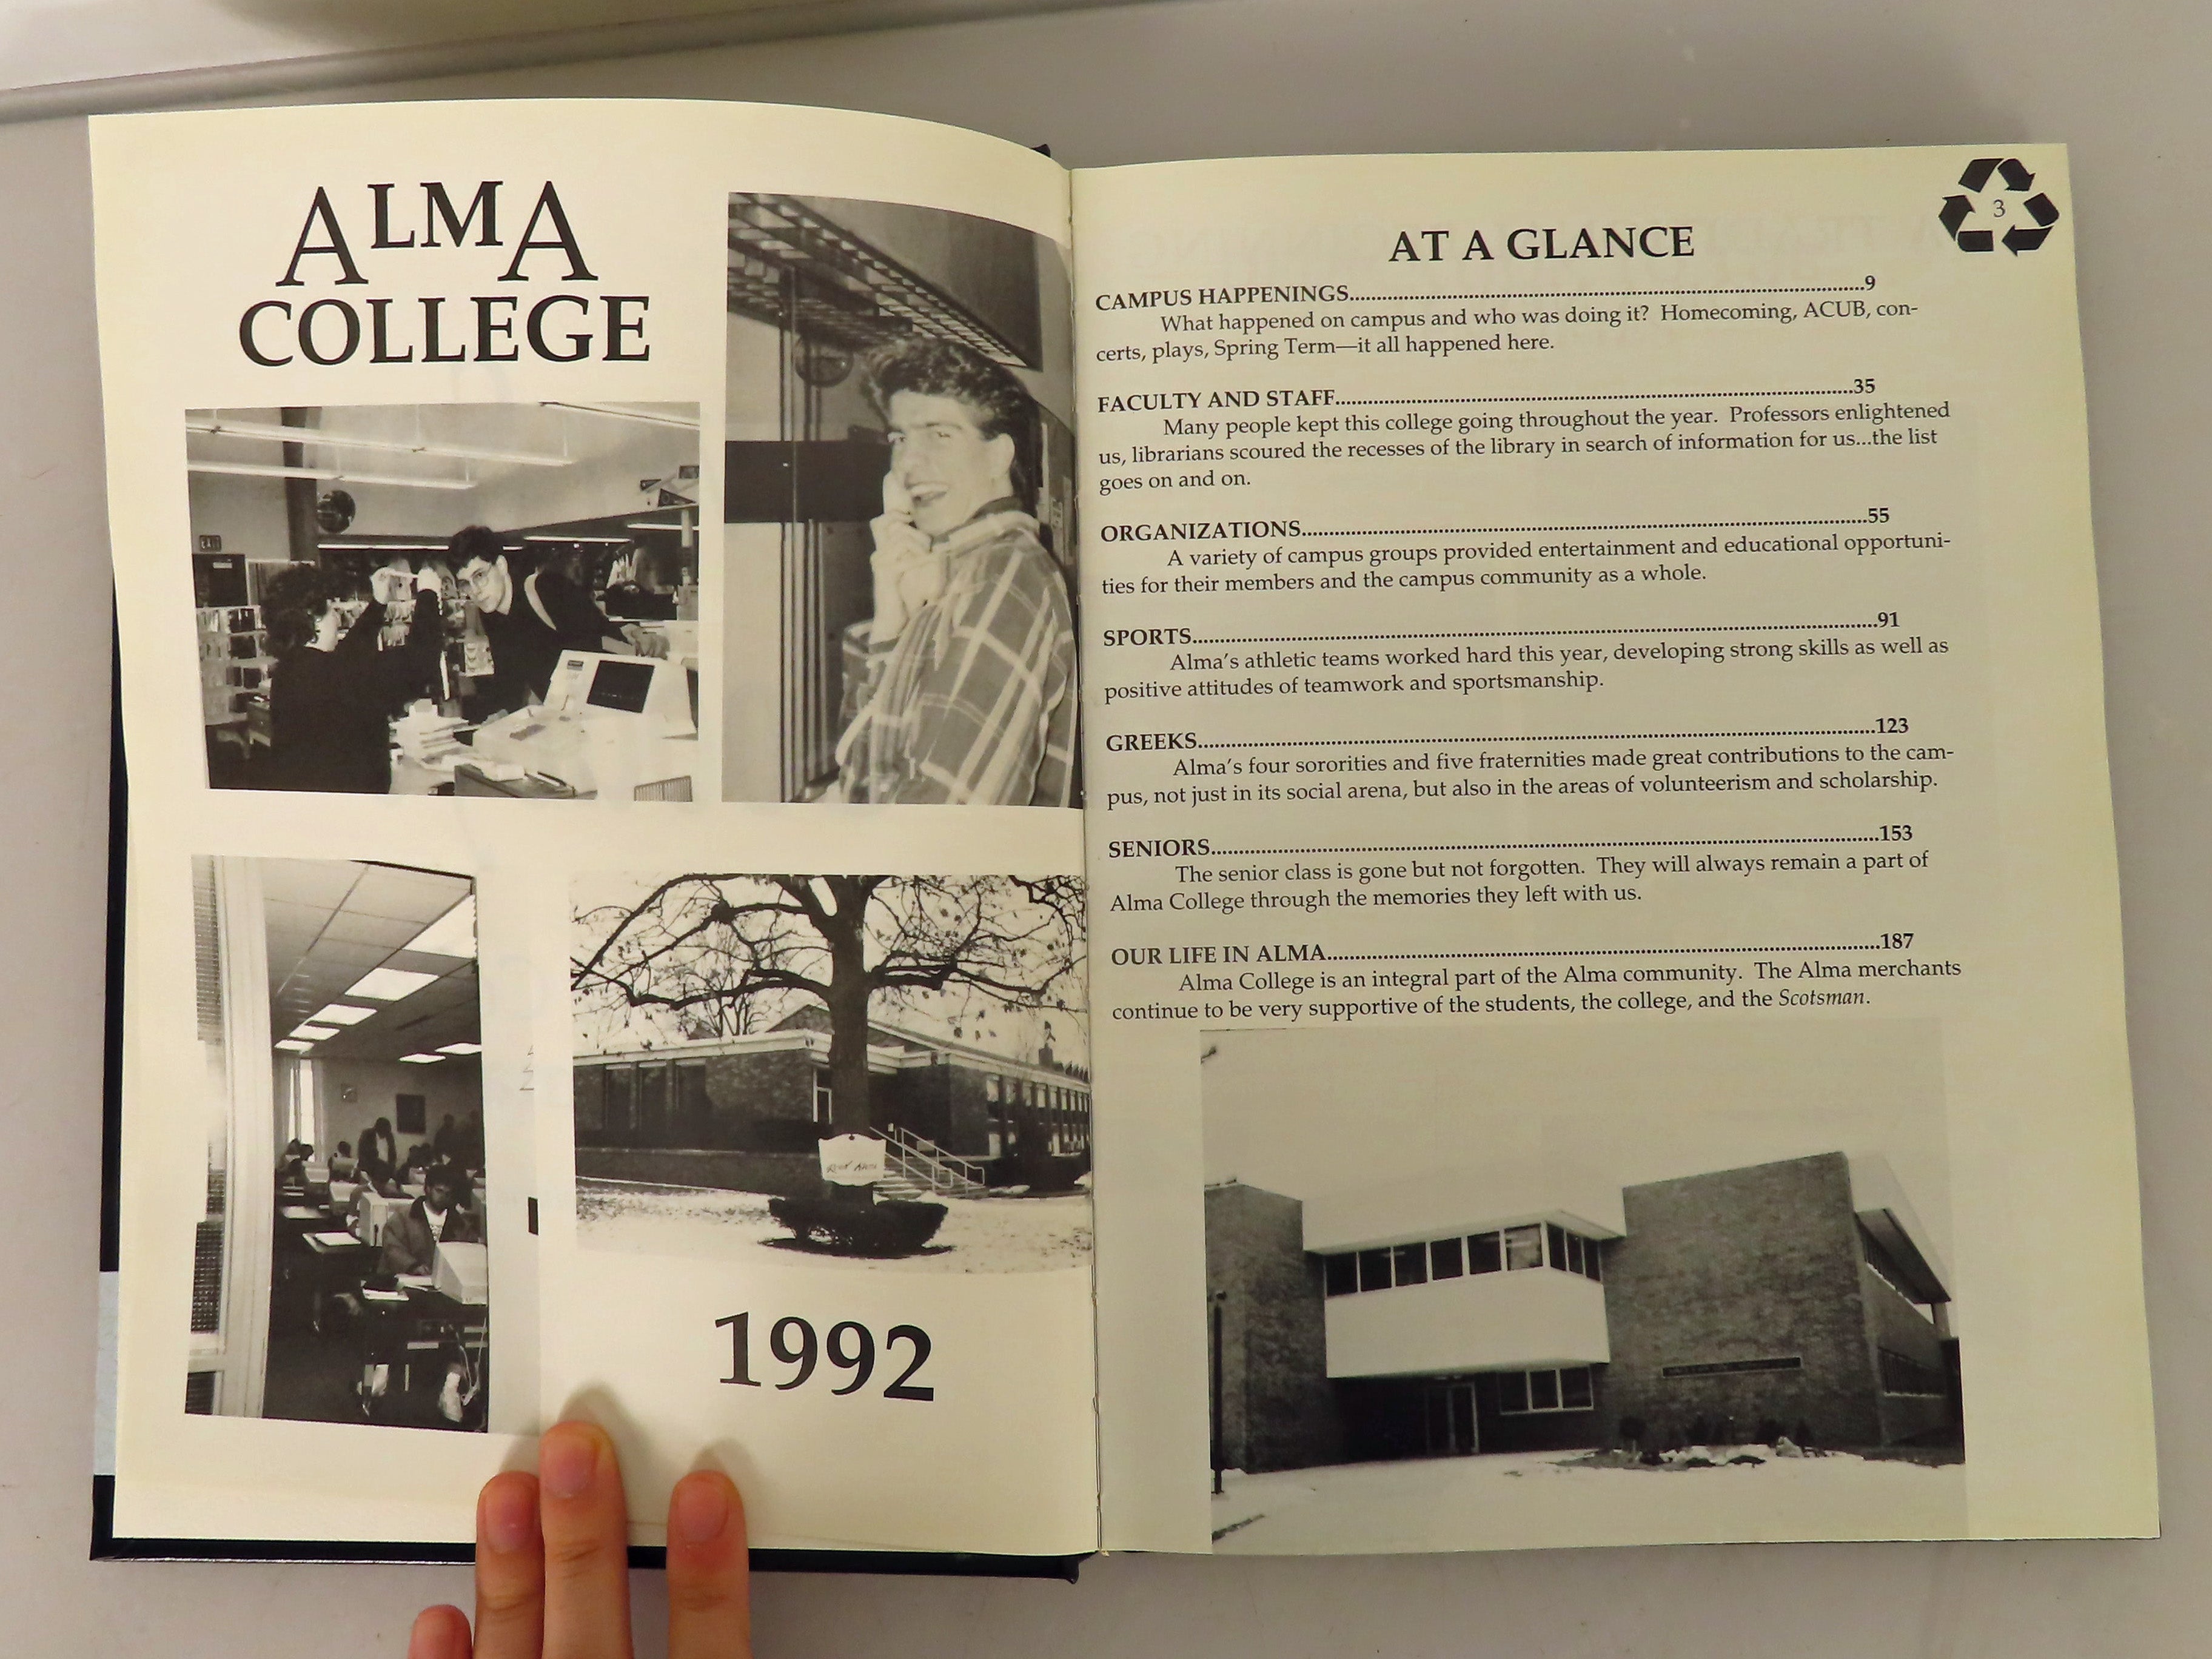 The Alma College Scotsman Yearbook Michigan 1992